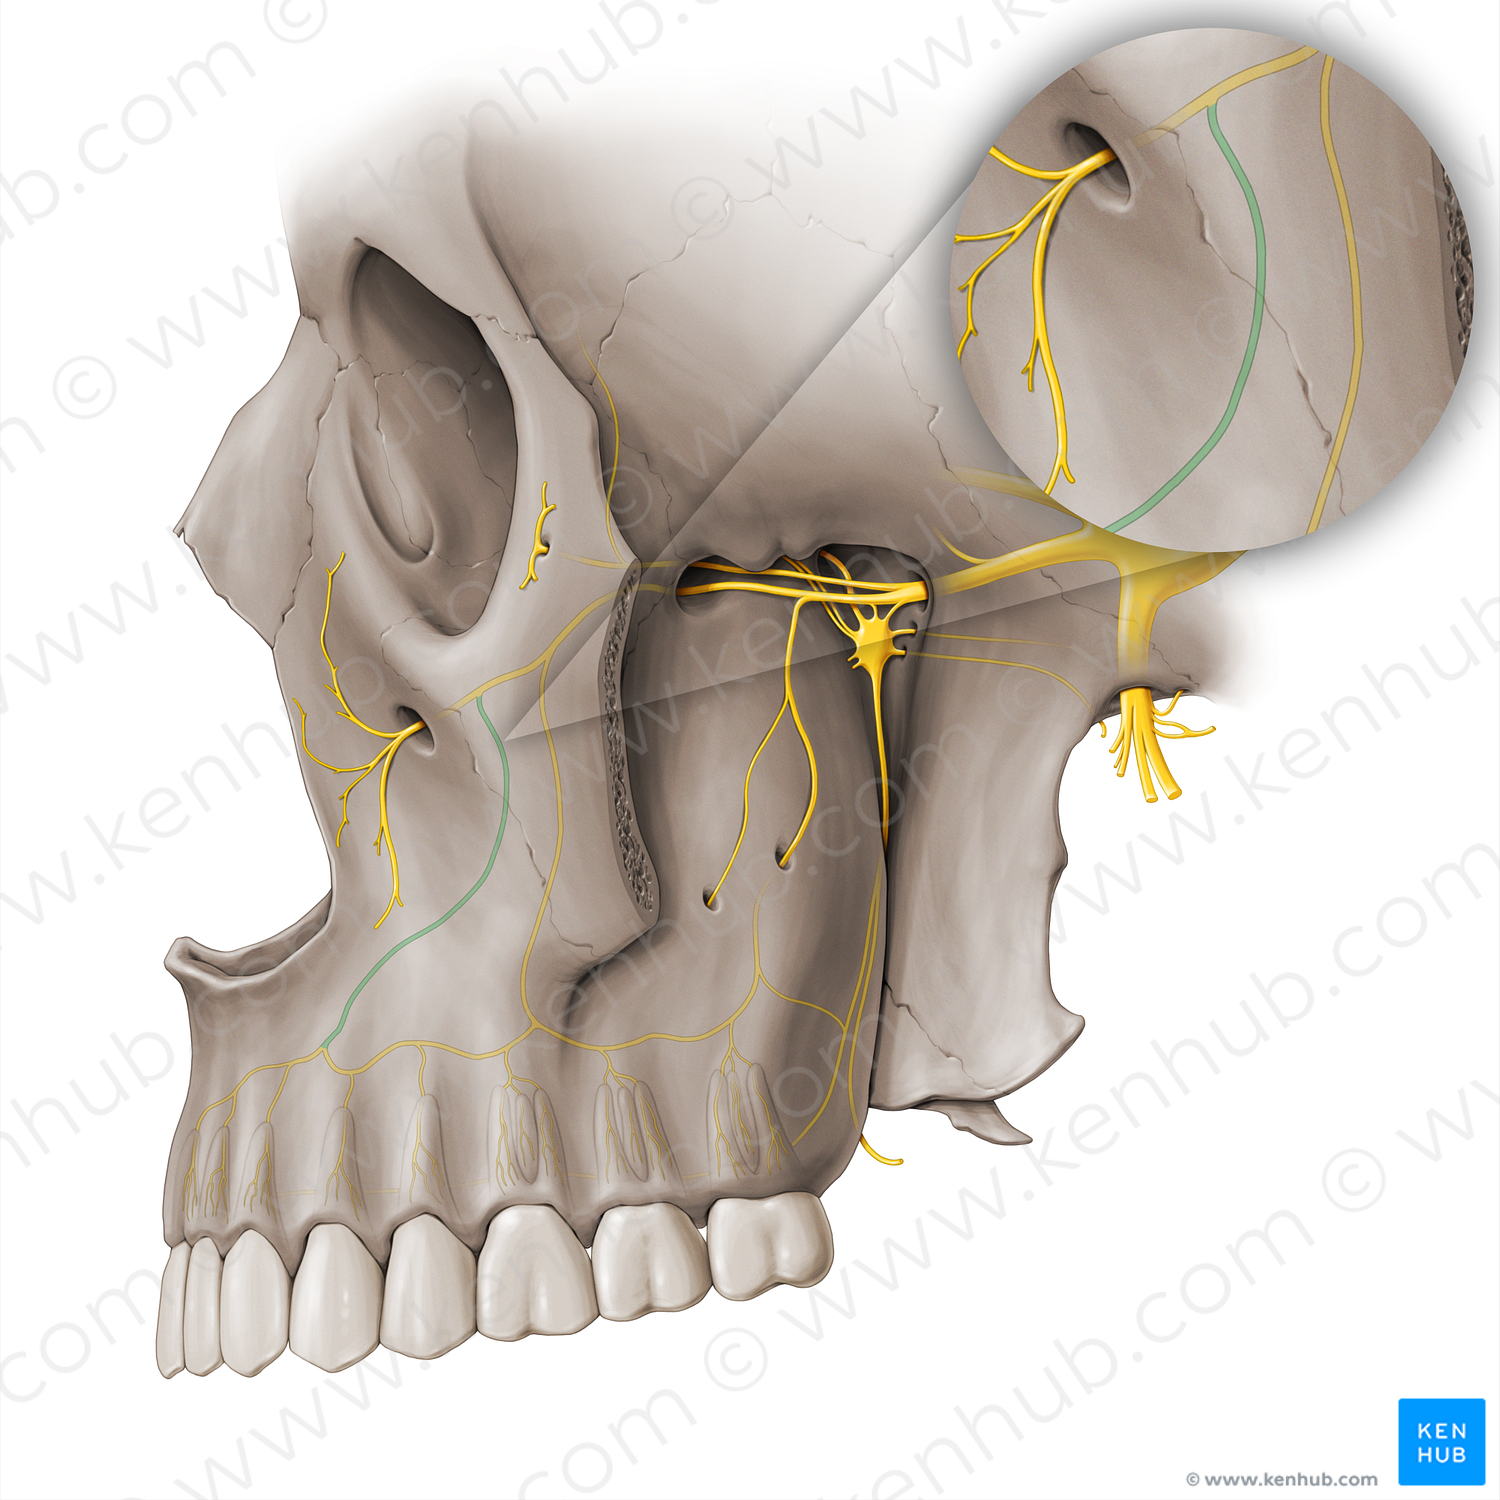 Anterior superior alveolar nerve (#18441)